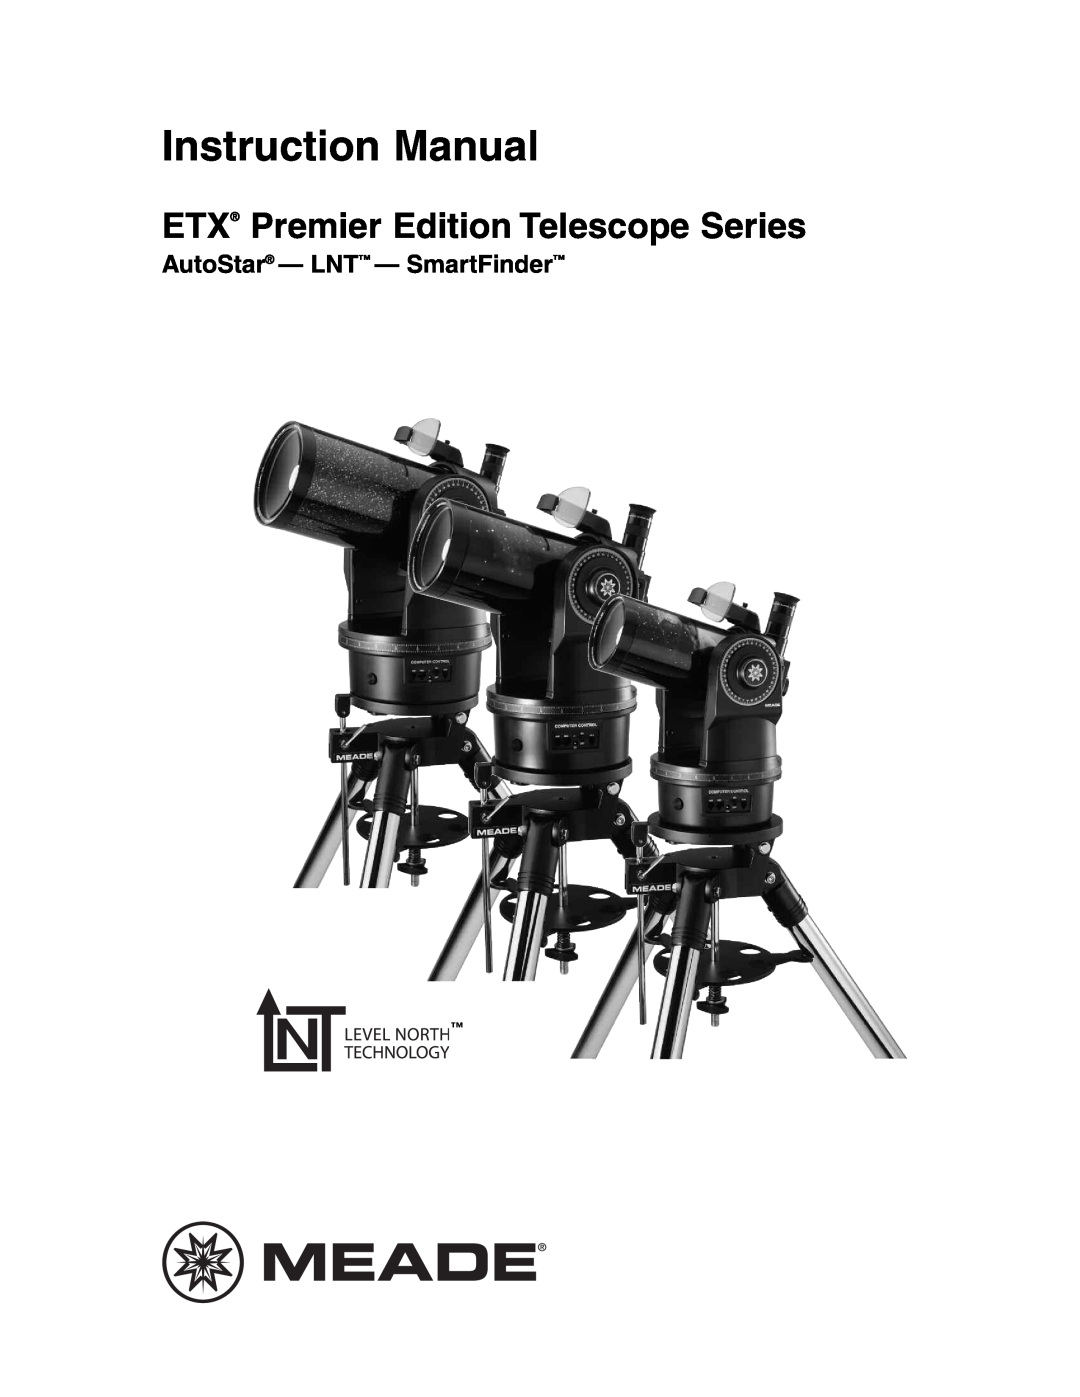 Meade ETX-90PE instruction manual Instruction Manual, ETX Premier Edition Telescope Series, AutoStar - LNT - SmartFinder 